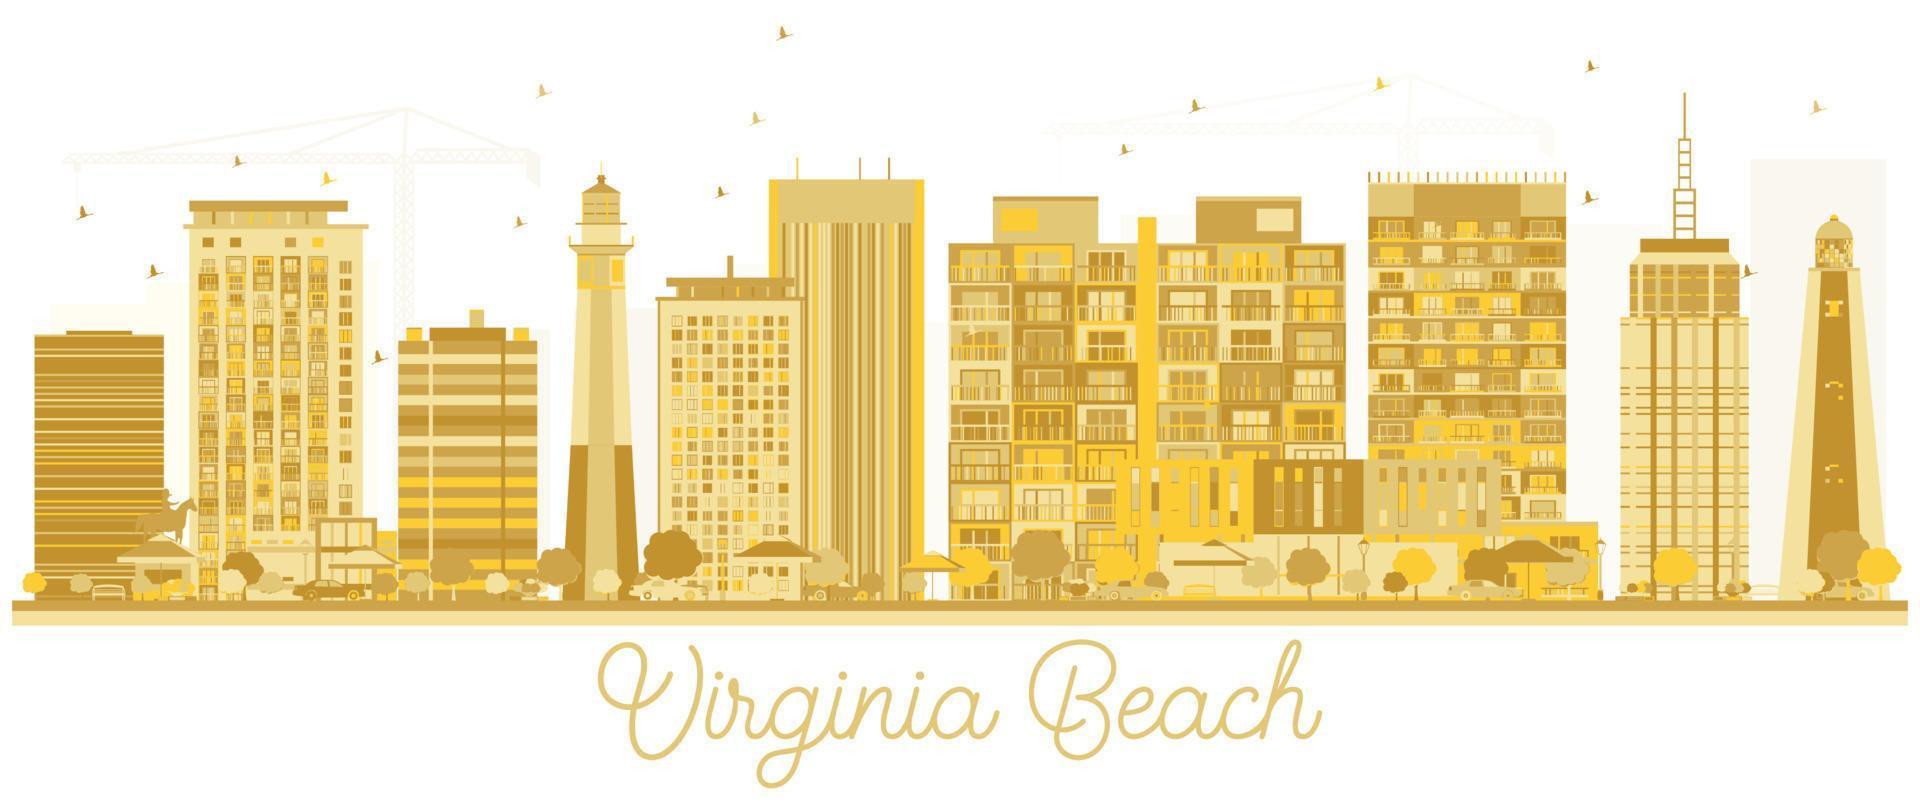 Virginia Beach City Skyline goldene Silhouette. vektor